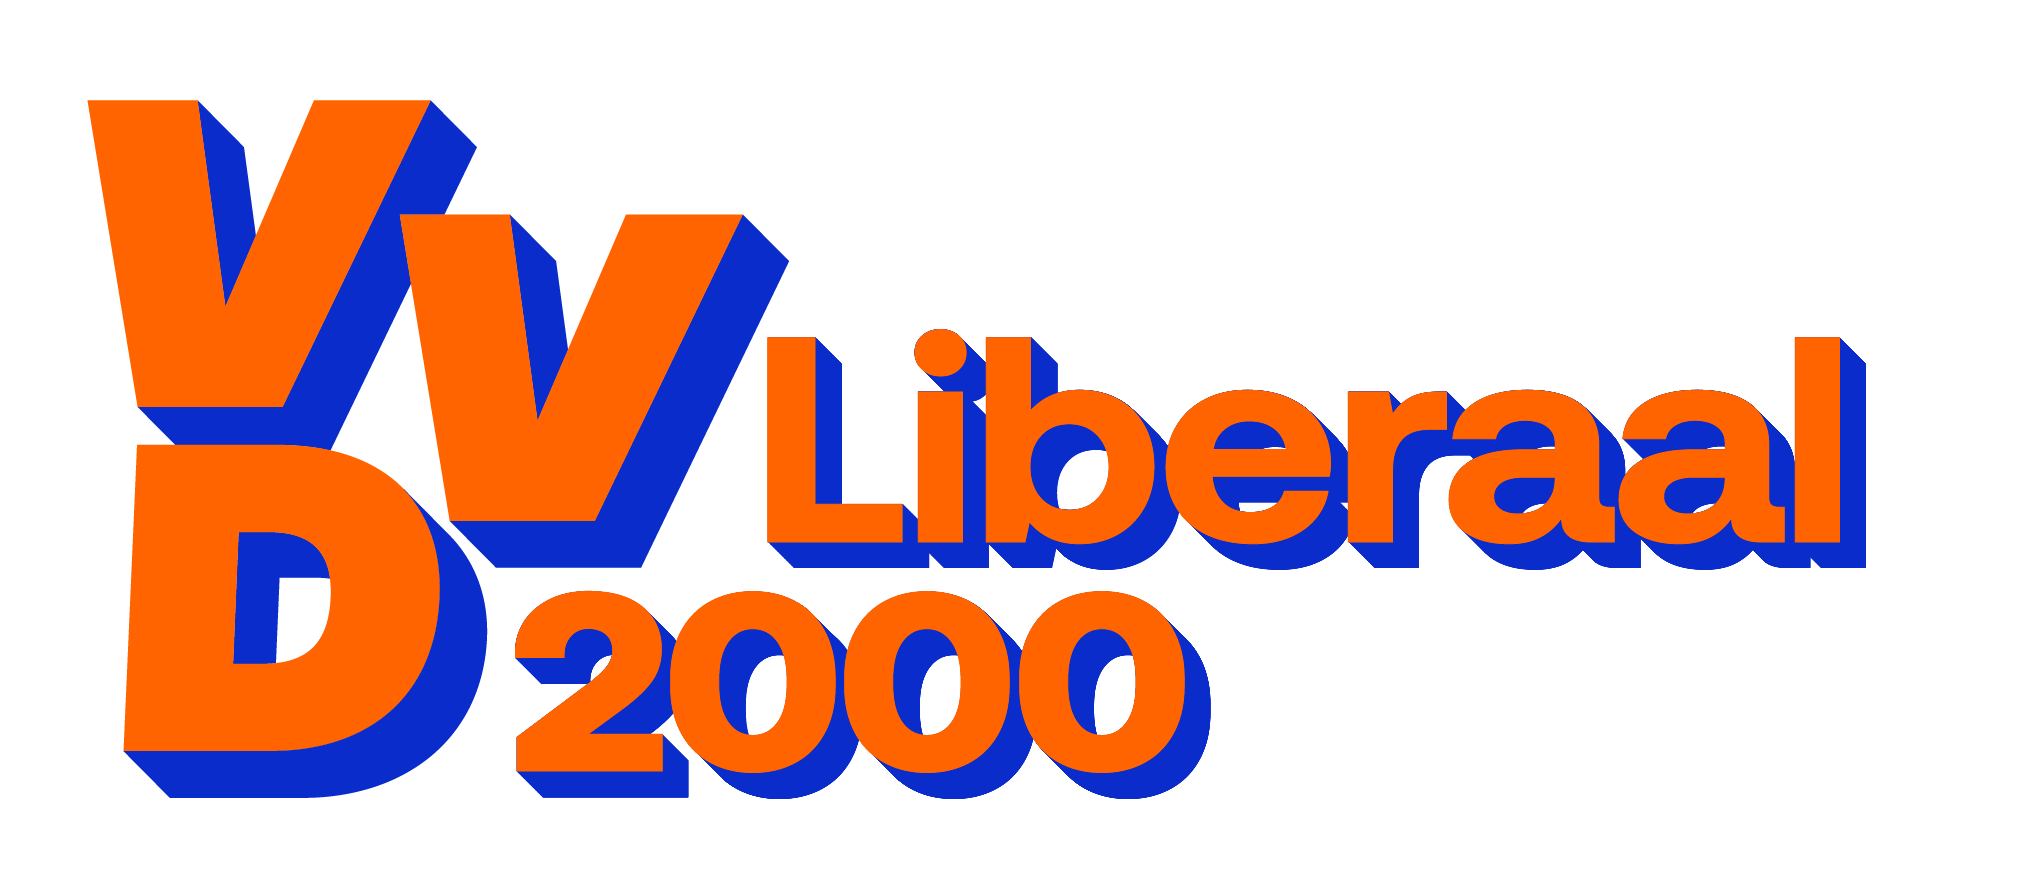 VVD Liberaal 2000 Voorst